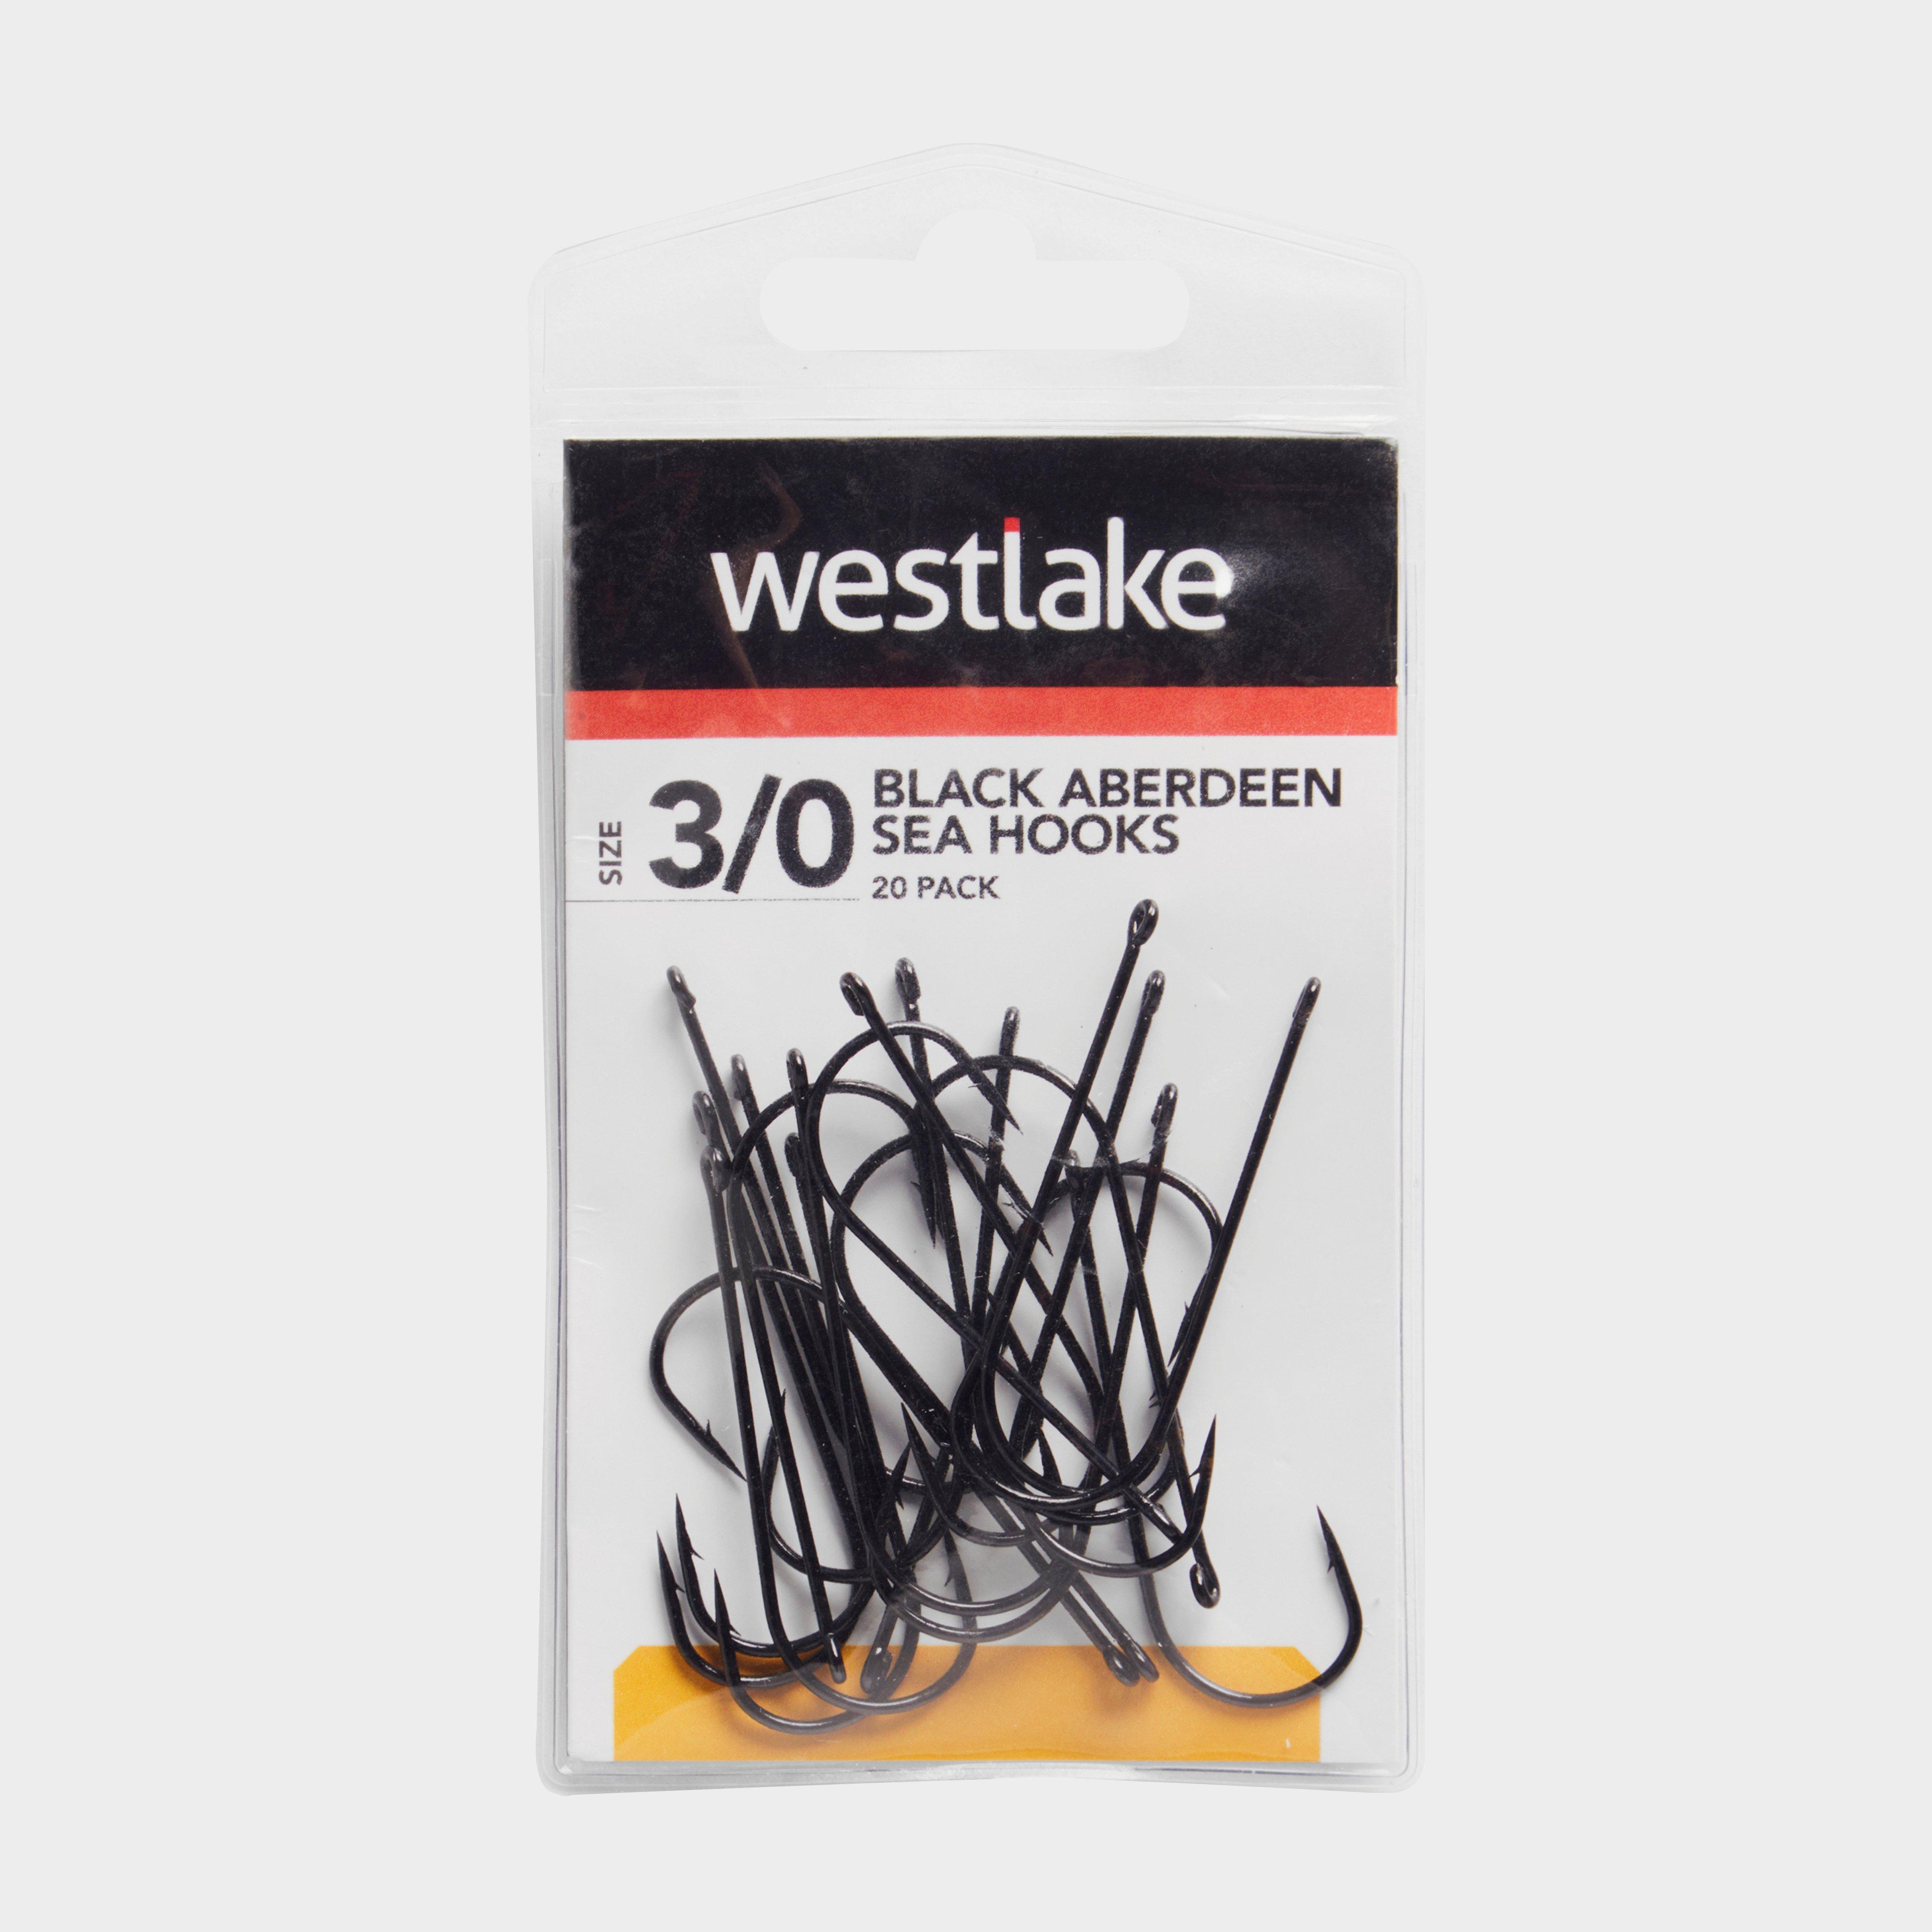 Westlake Black Aberdeen 20 Pack Size 3/0